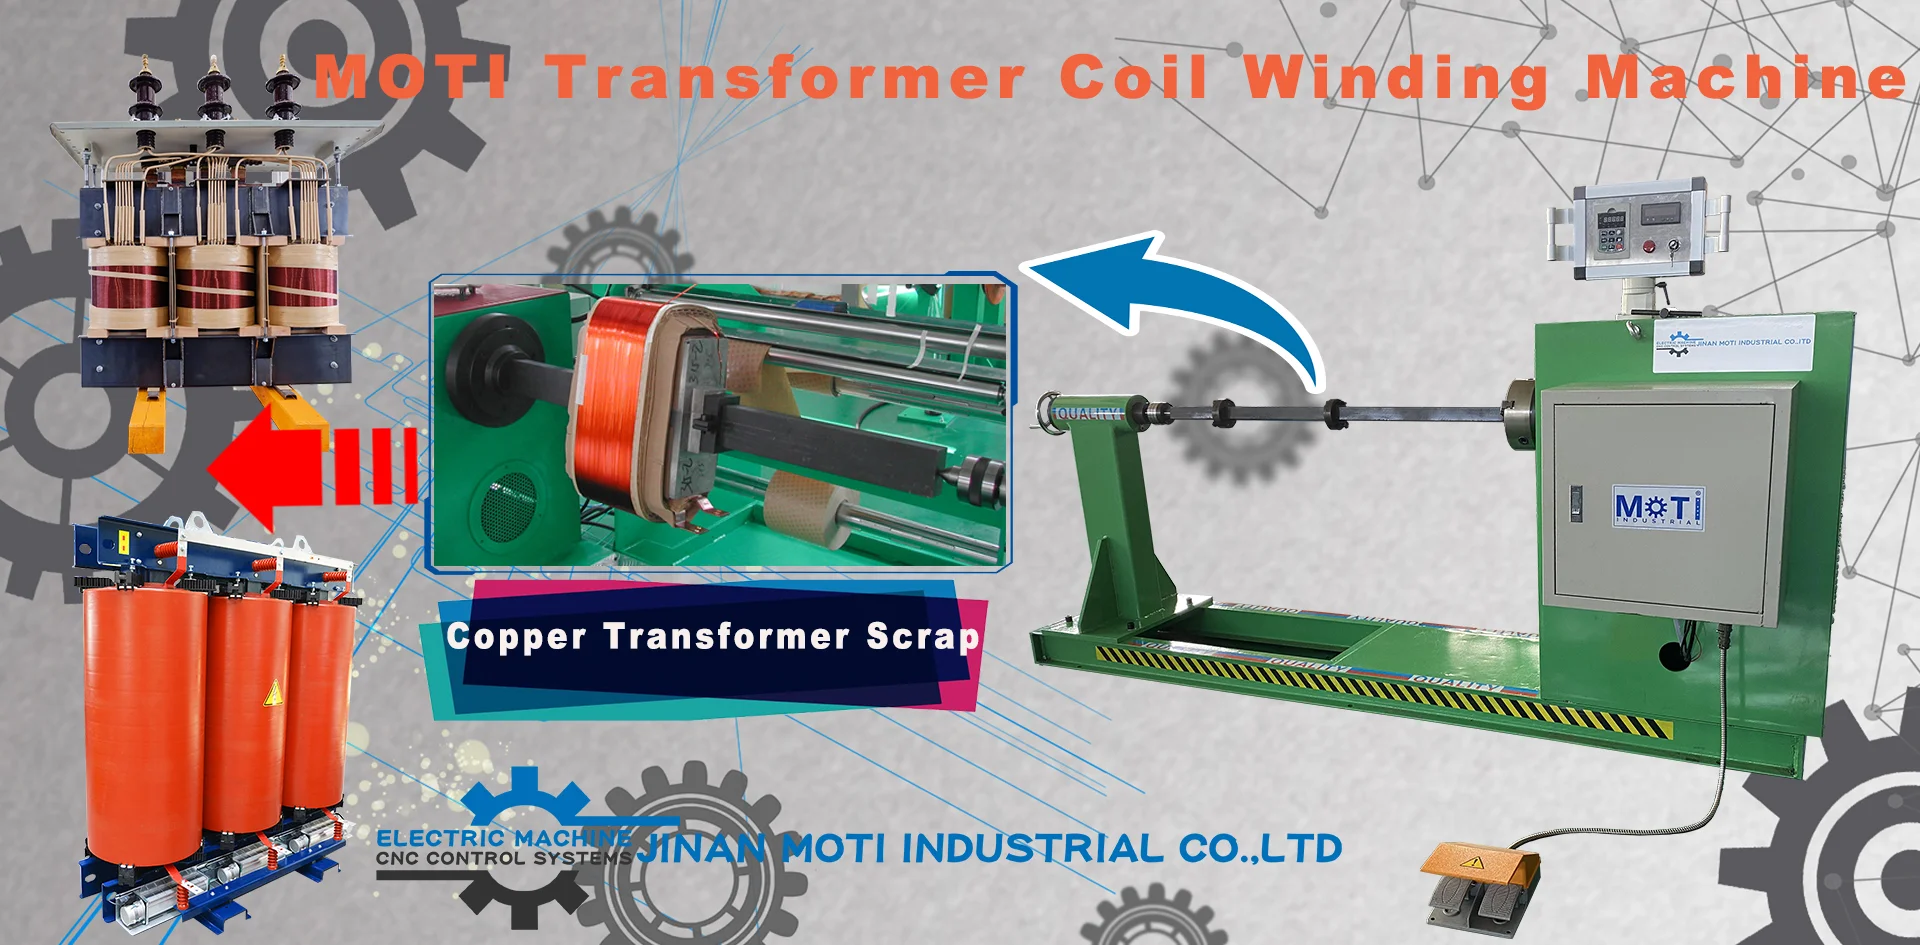 pttransformer coil winding machine-20210713